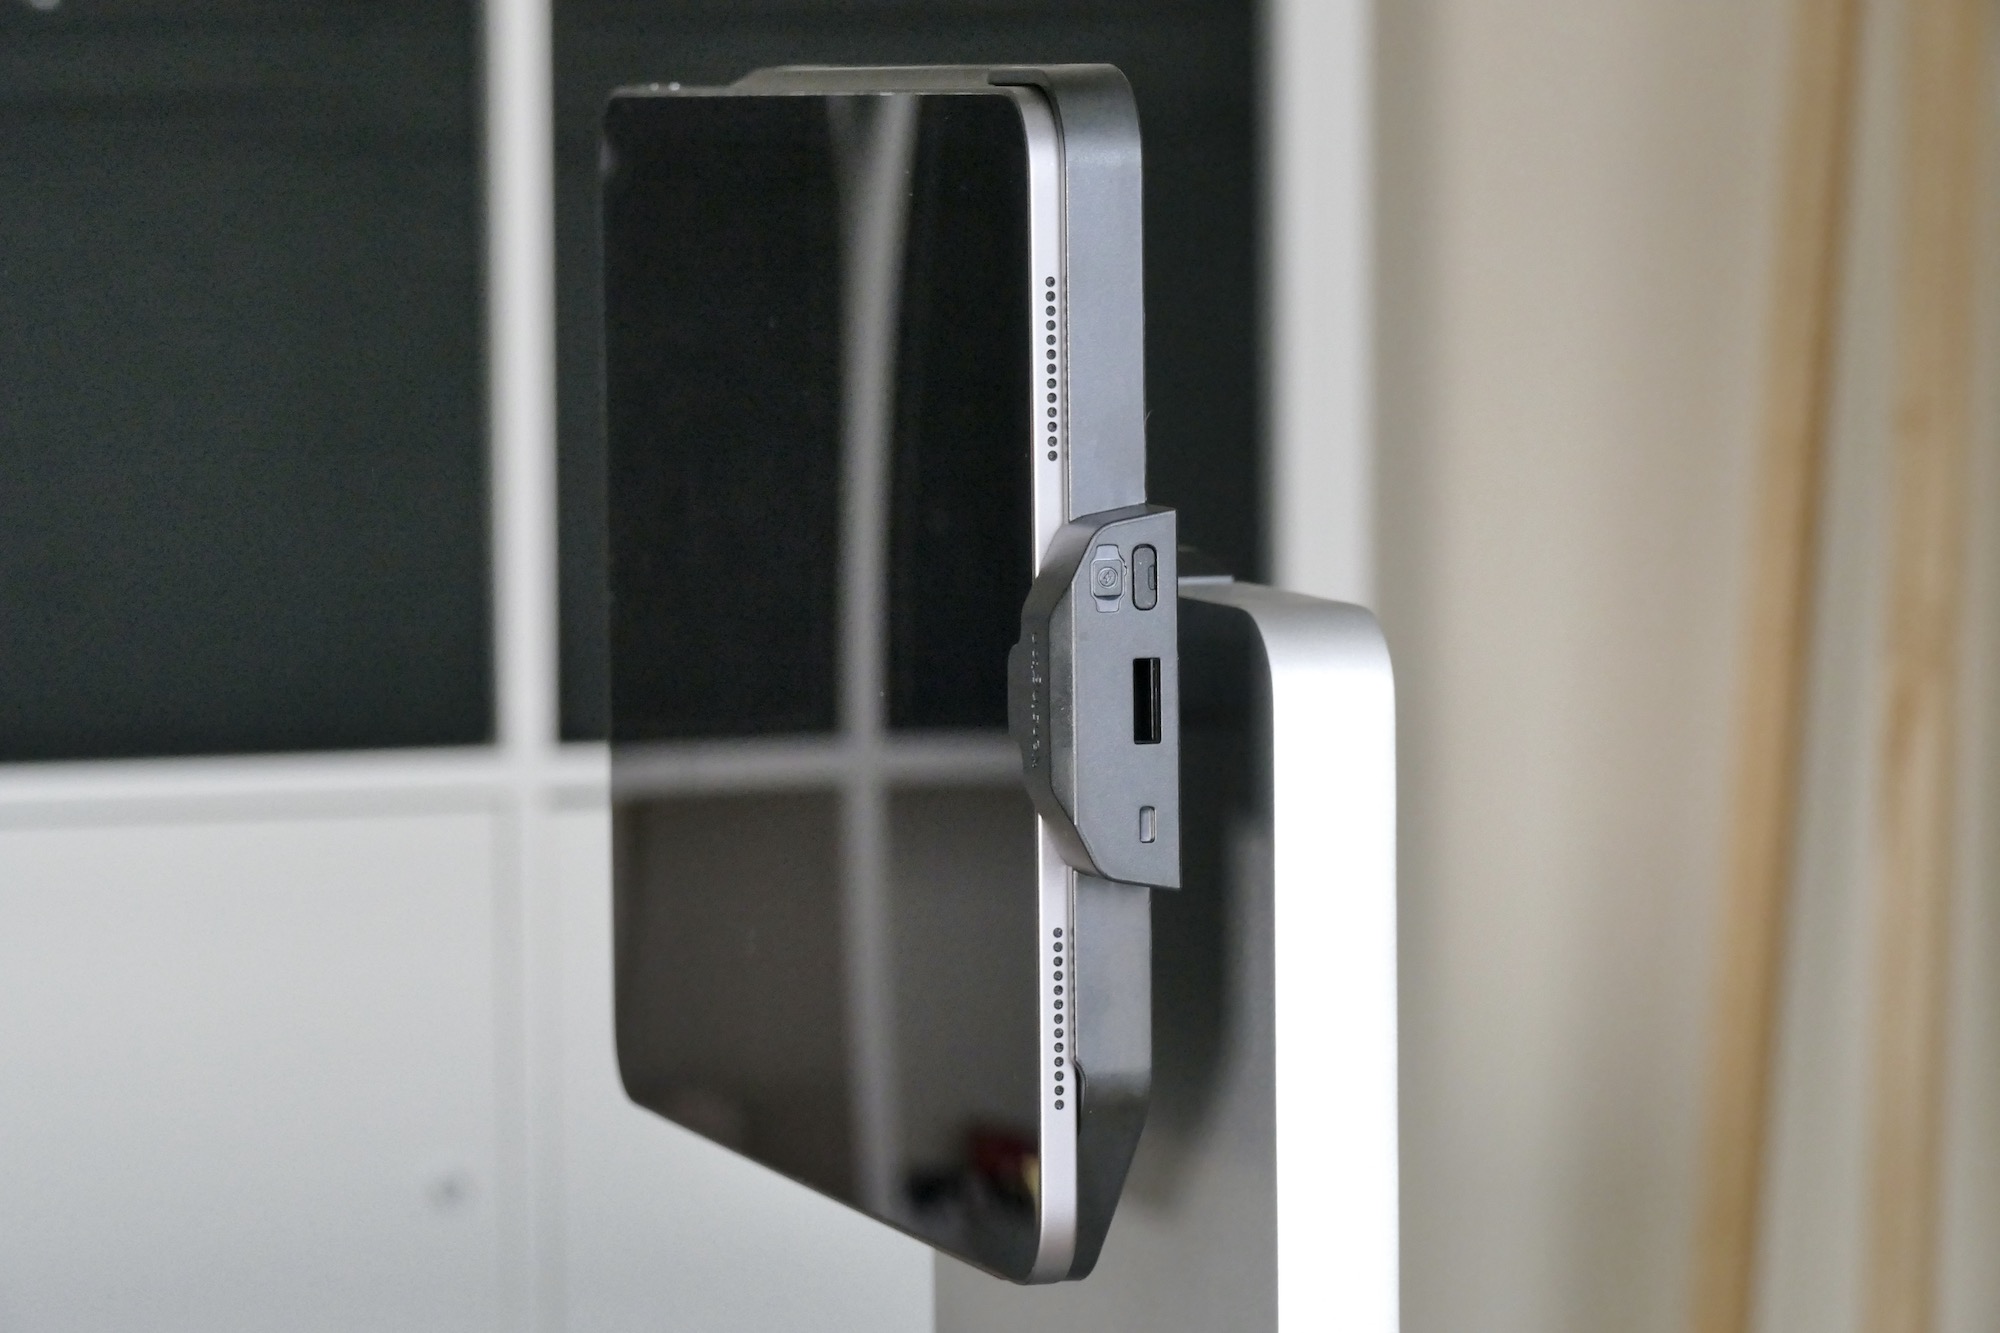 iPad charger on the Kensington StudioDock.